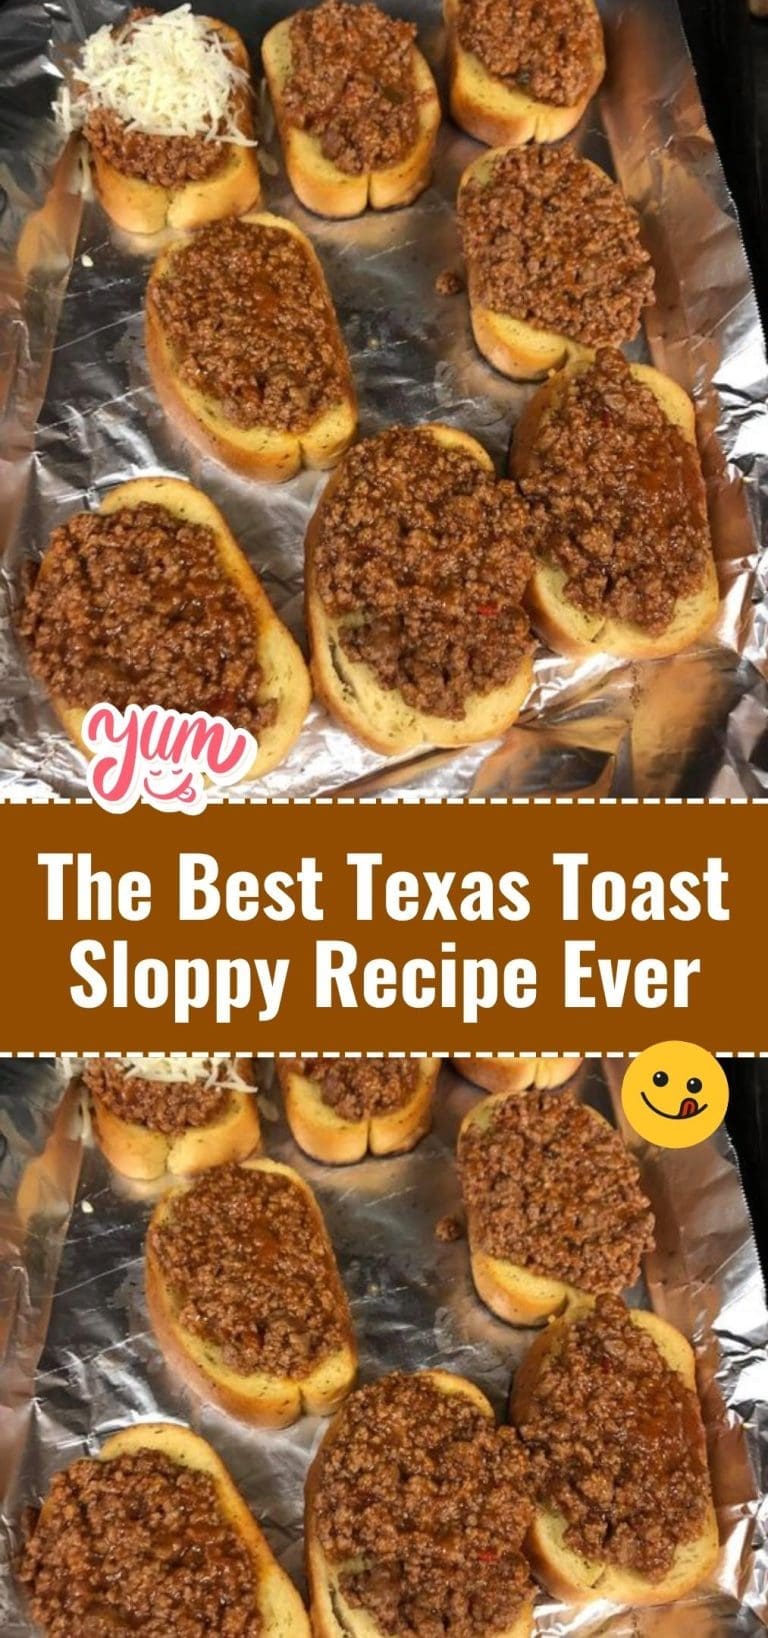 The Best Texas Toast Sloppy Recipe Ever